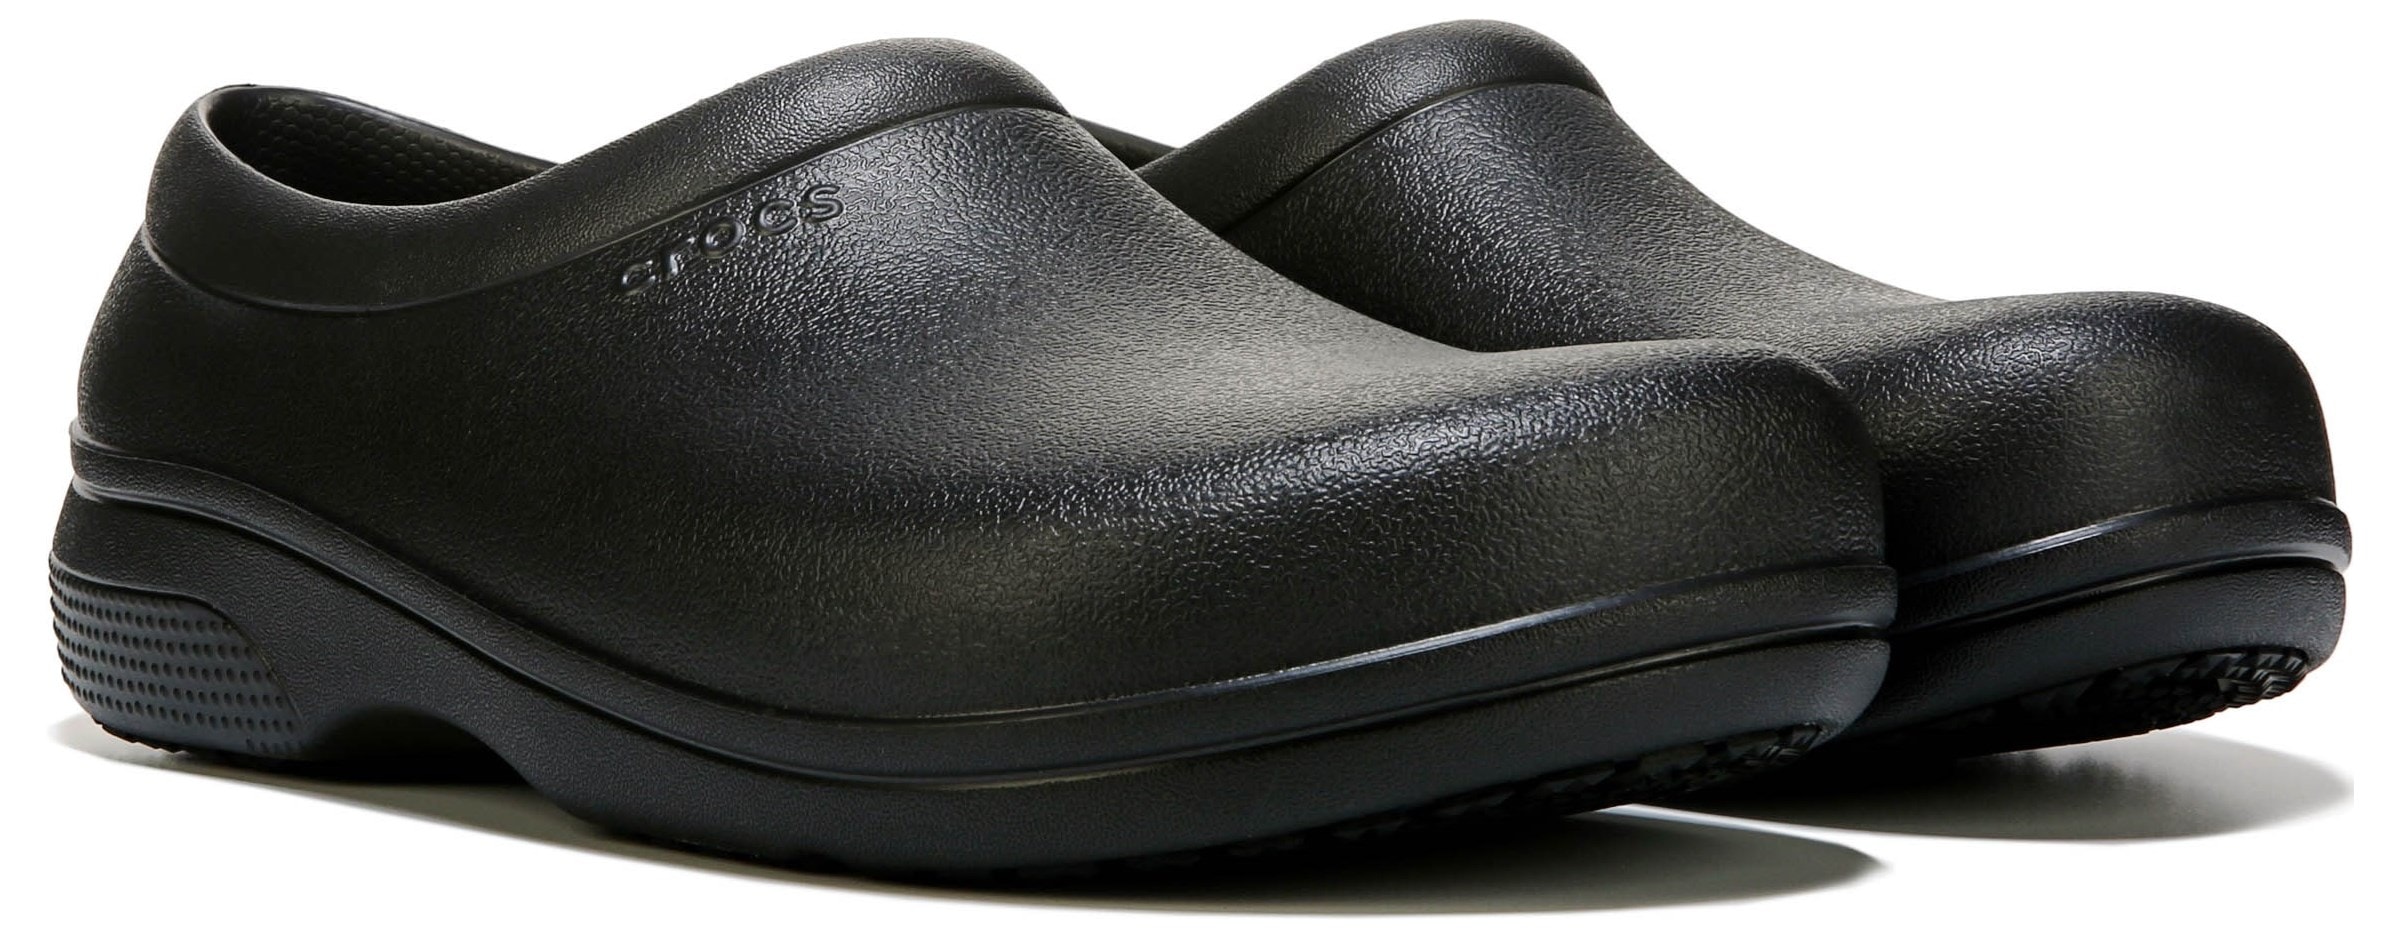 Crocs On The Clock Slip Resistant Slip On | Famous Footwear